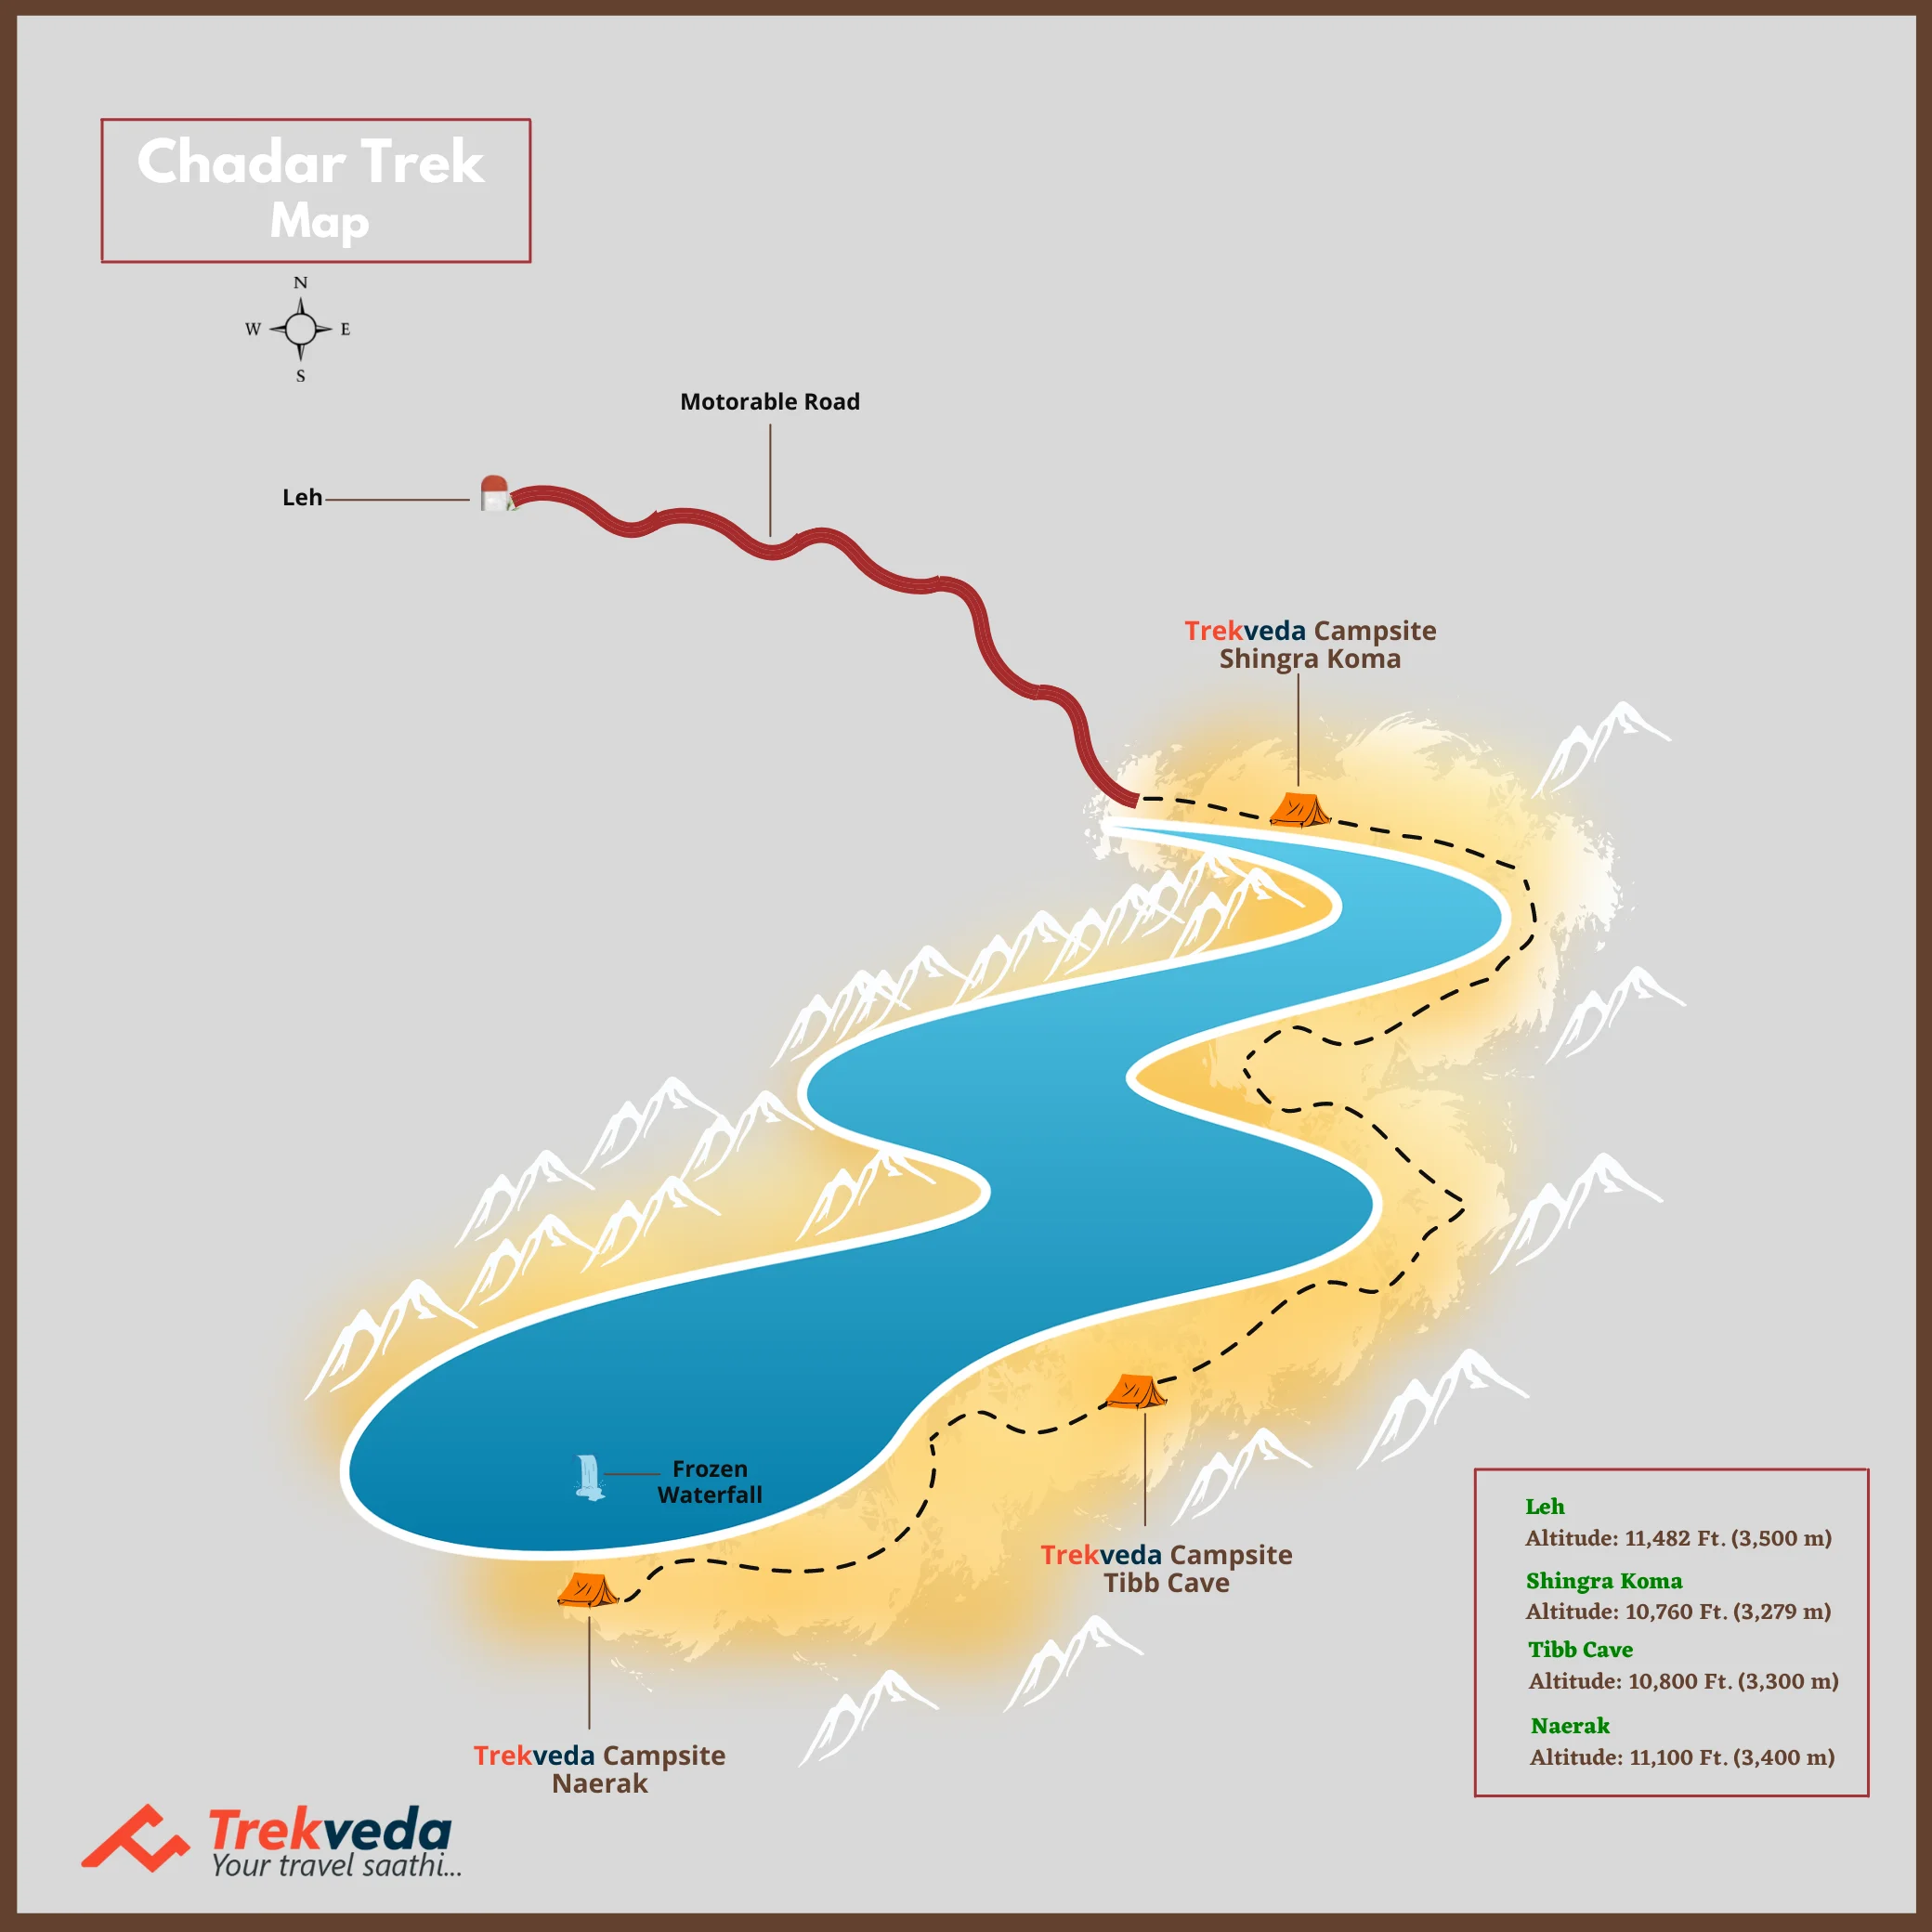 Chadar Trek Map